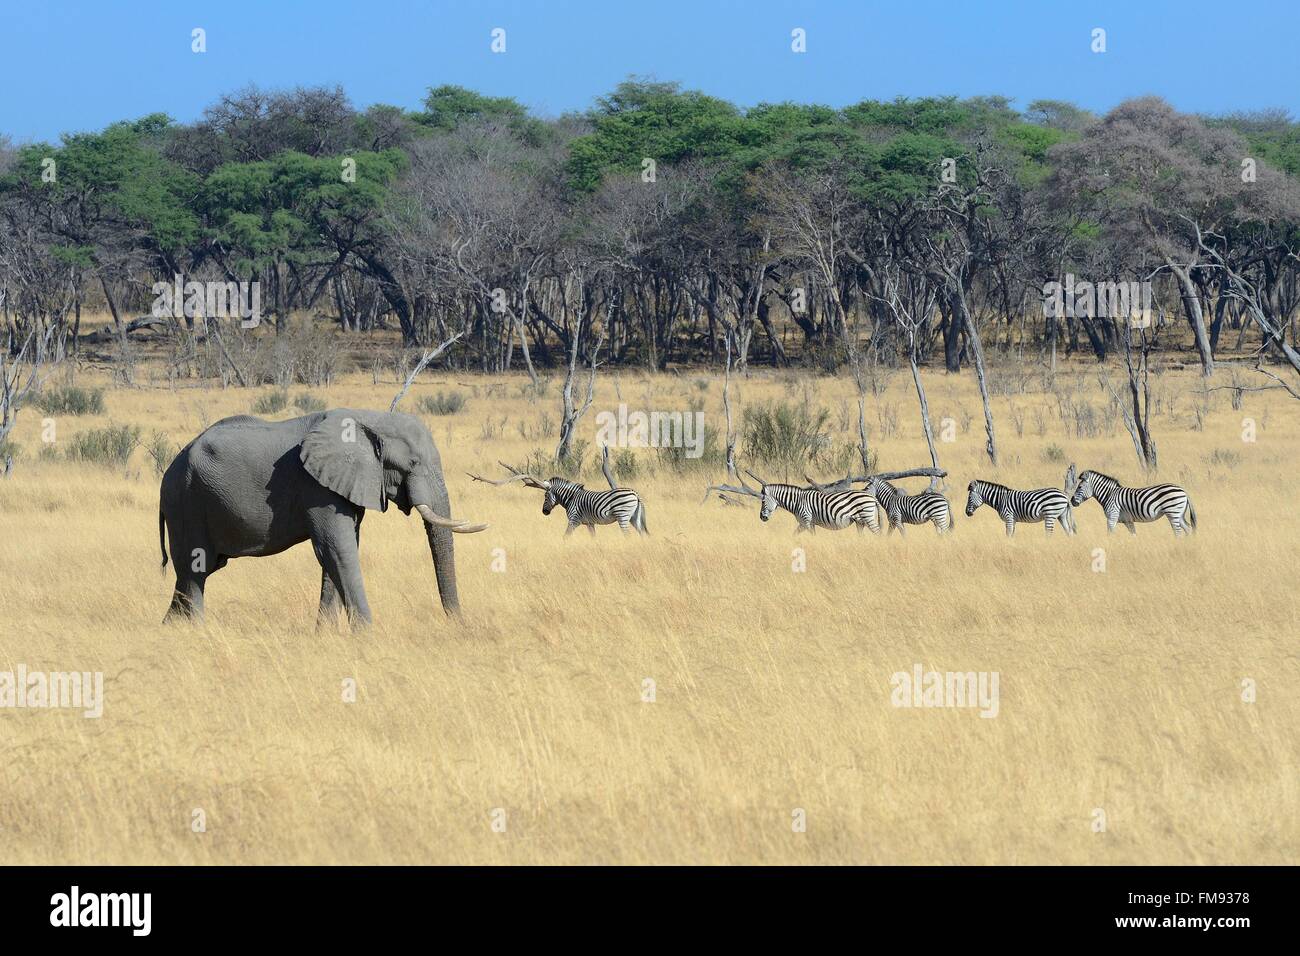 Lo Zimbabwe, Matabeleland North Provincia, Parco Nazionale di Hwange, wild elefante africano (Loxodonta africana) e gruppo di zebre (Equus burchelli) Foto Stock